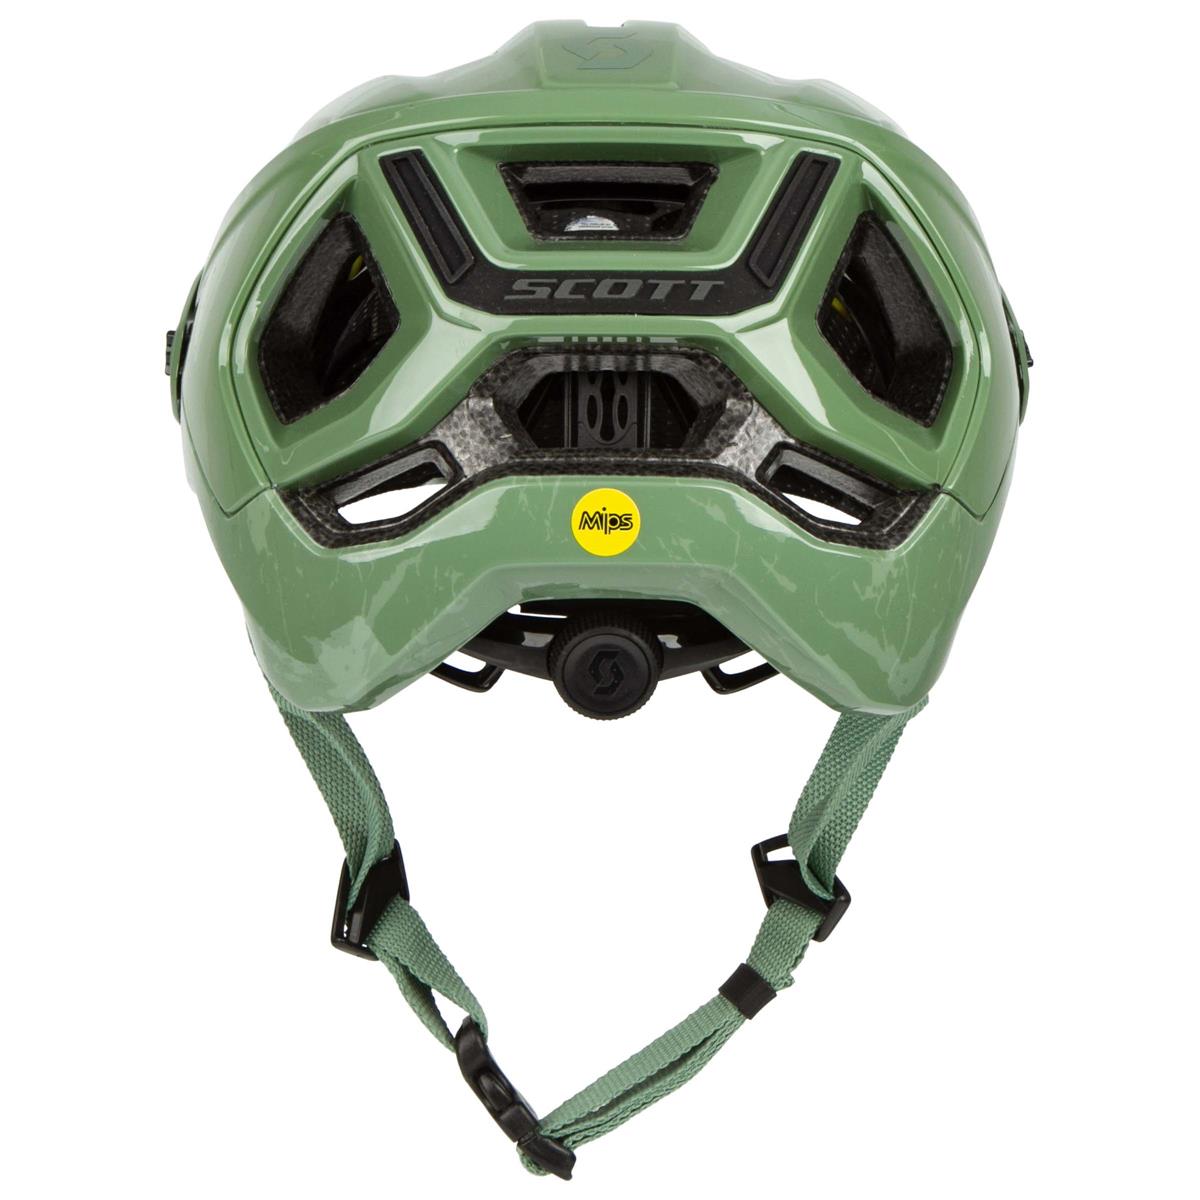 Scott Stego Plus MIPS Enduro Mountain Bike Helmet,Adult Size Small 51-55cm,Green 